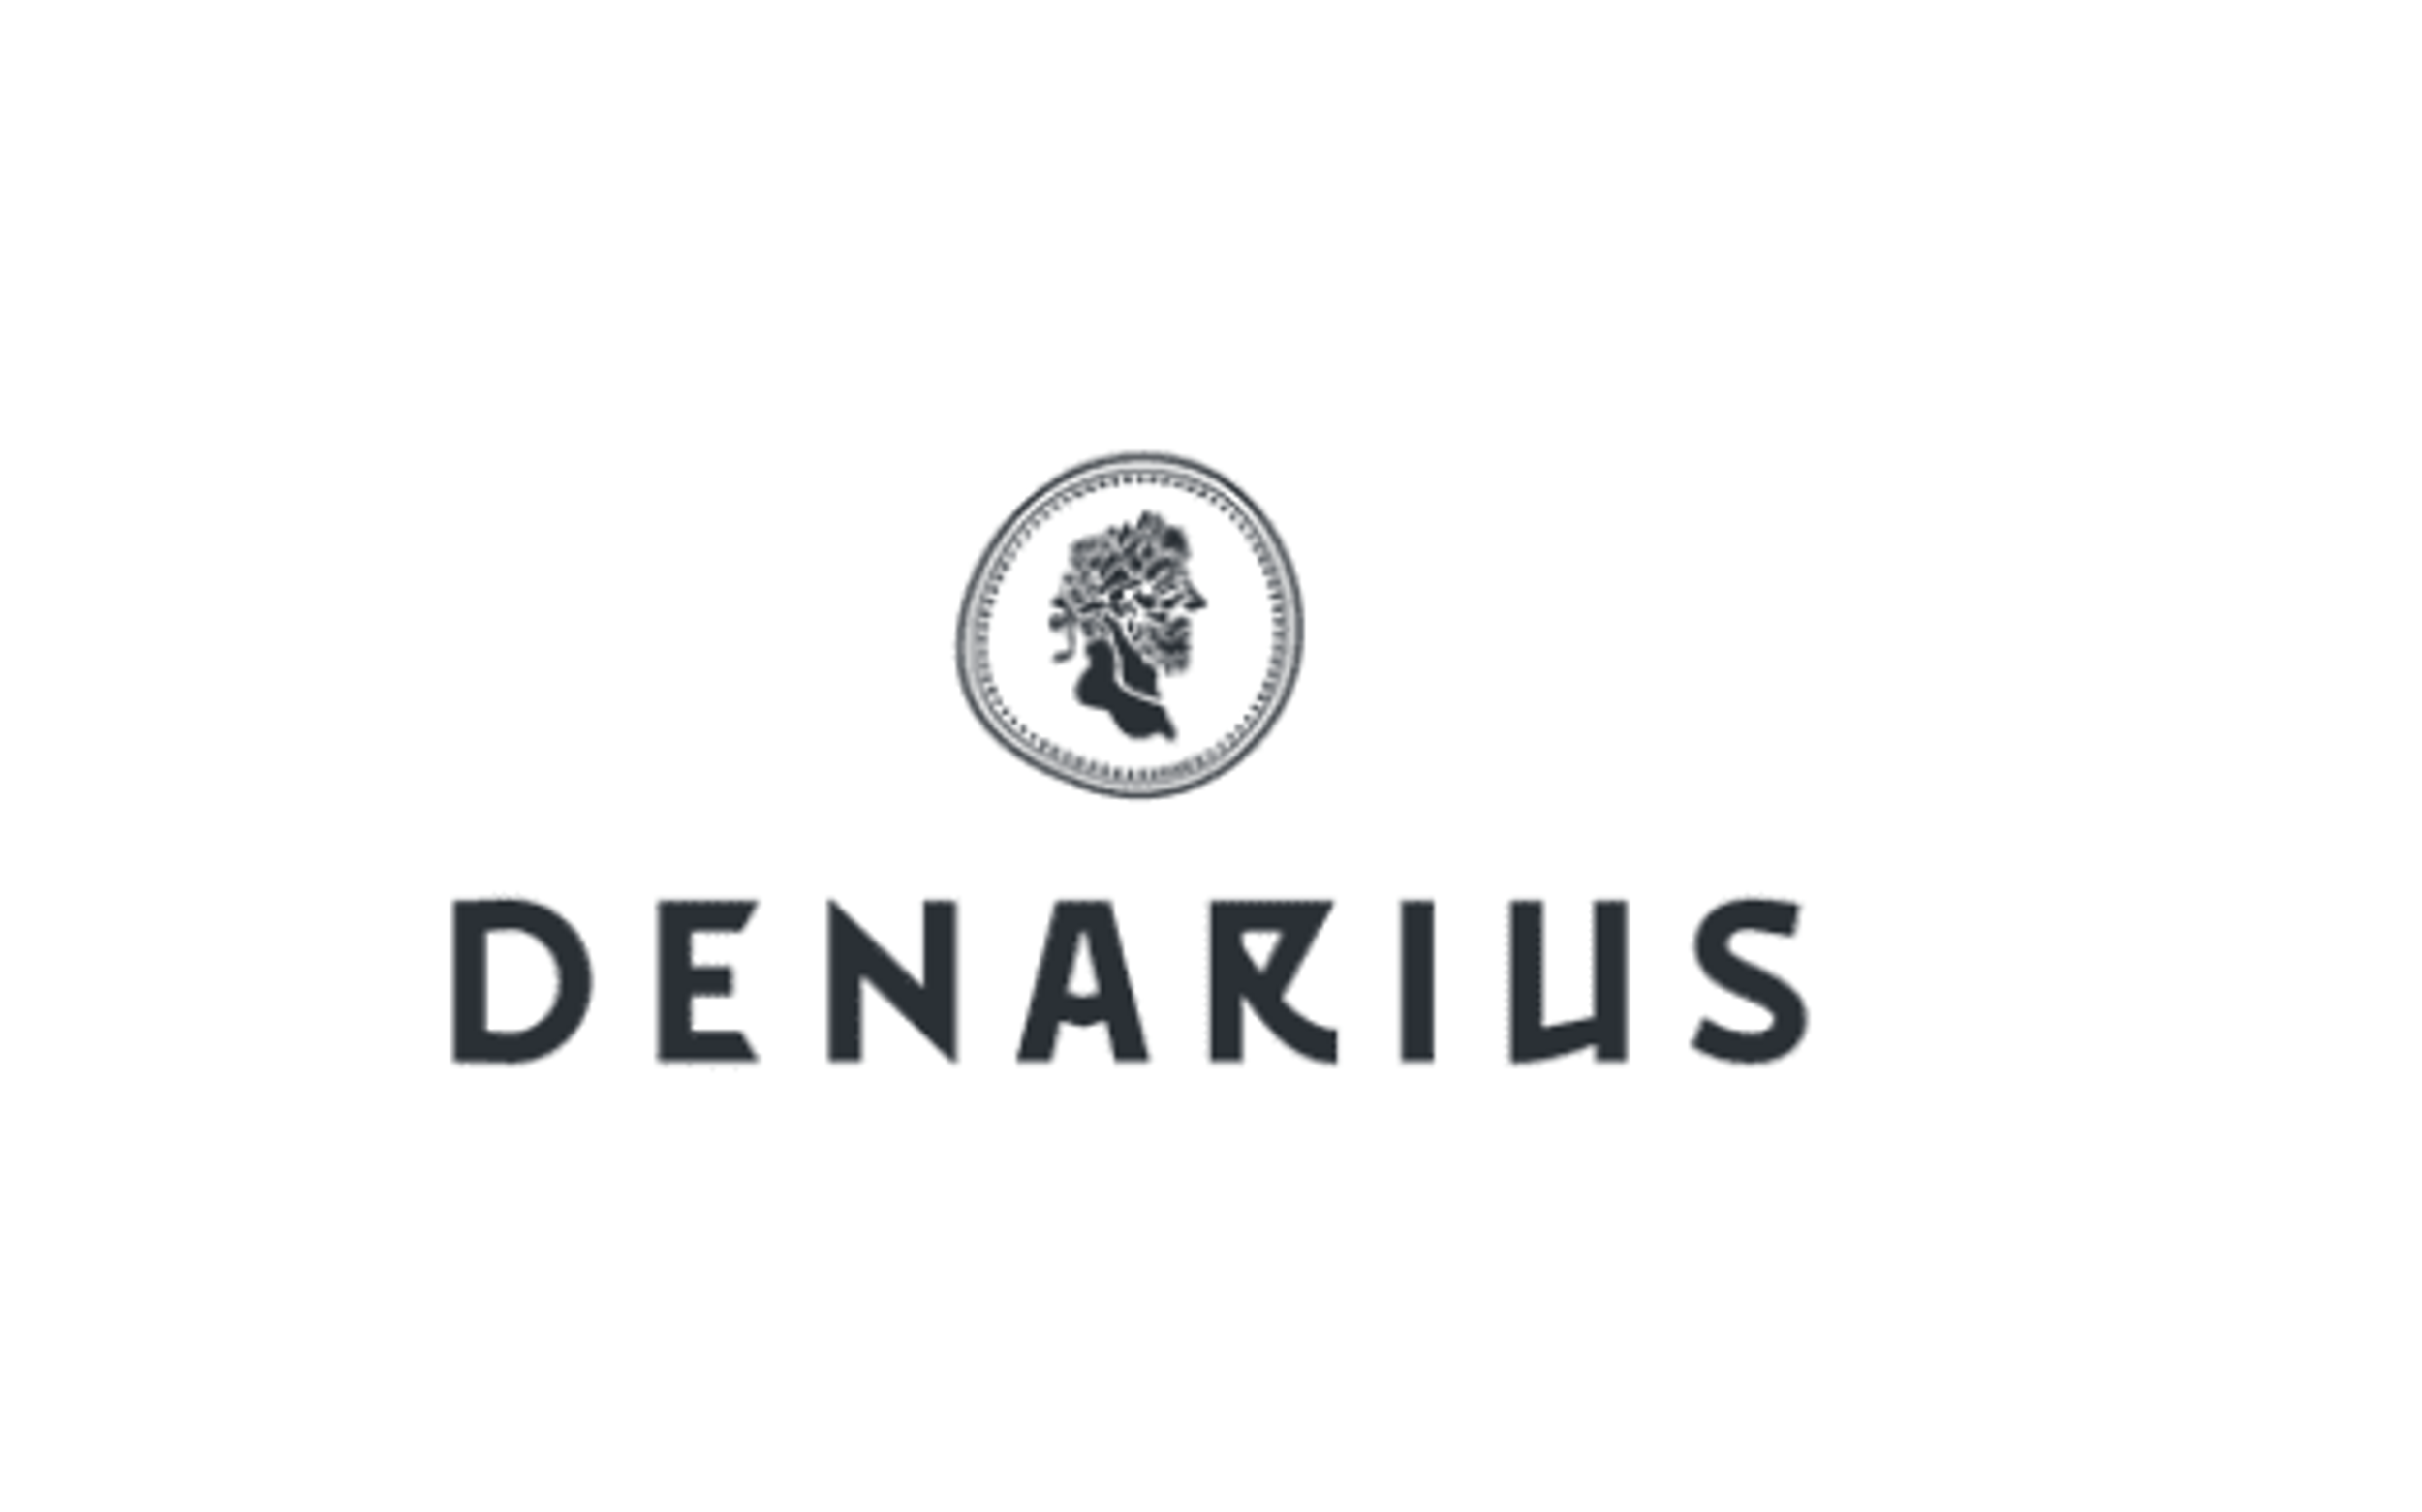 Denarius Announces Fourth Quarter and Fiscal Year 2021 Results